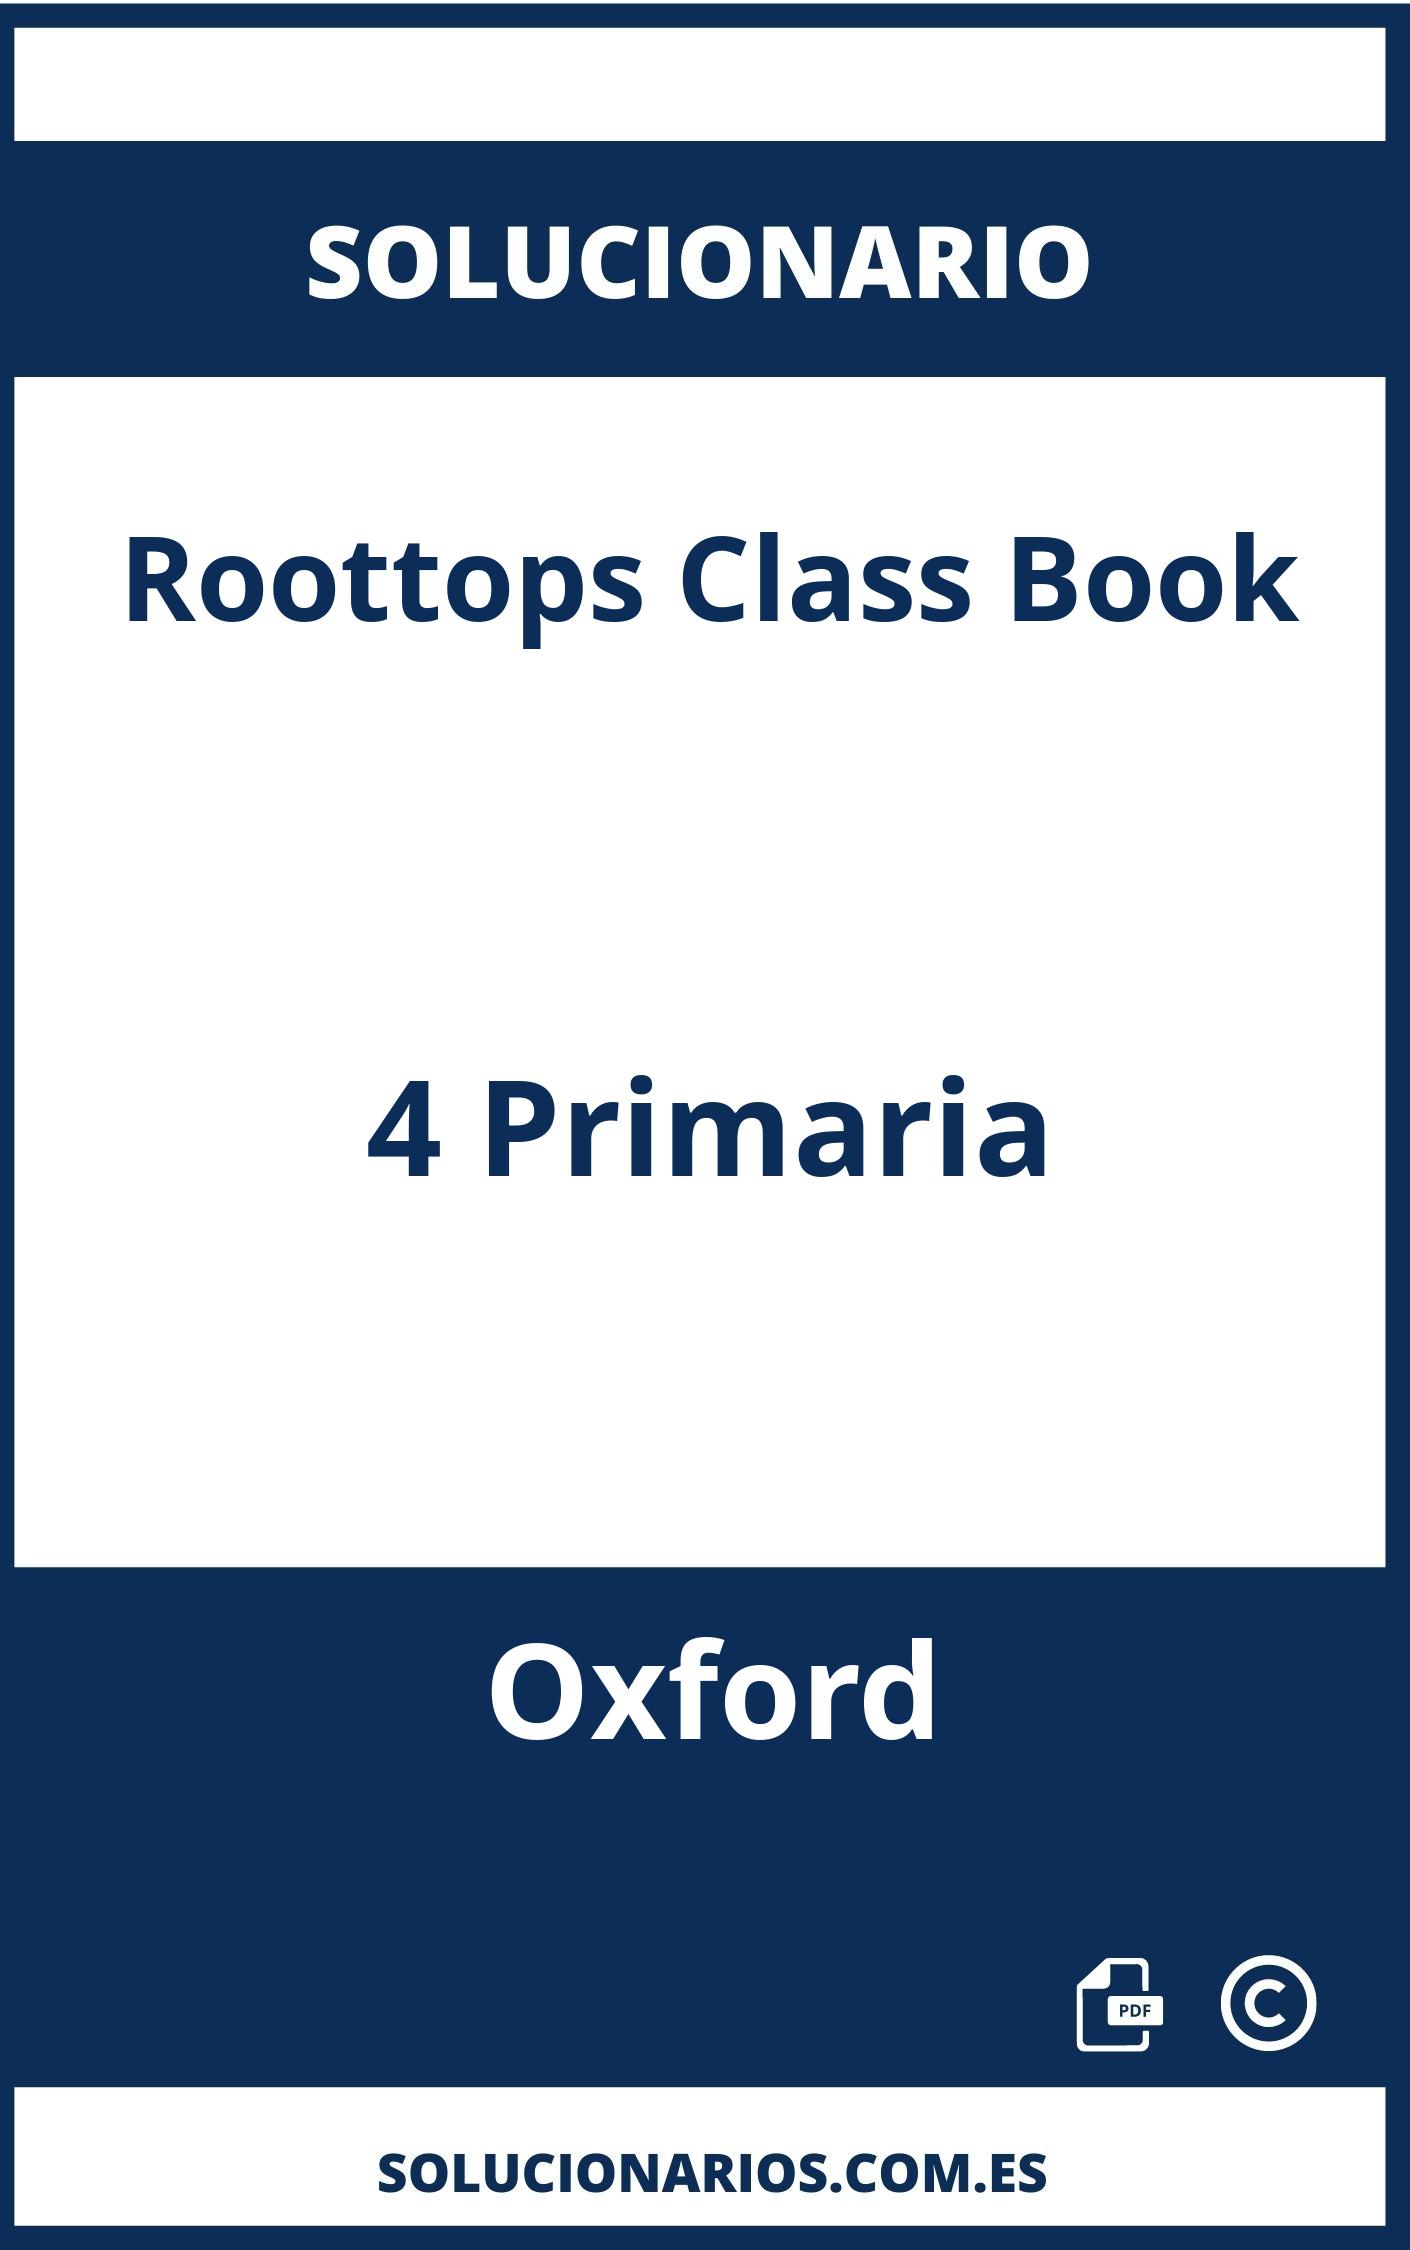 Solucionario Roottops Class Book 4 Primaria Oxford